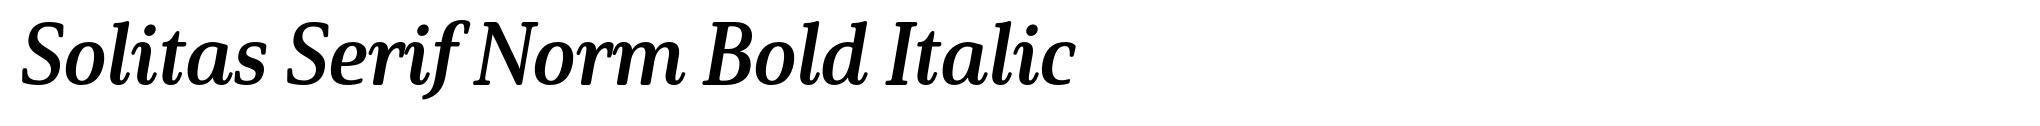 Solitas Serif Norm Bold Italic image